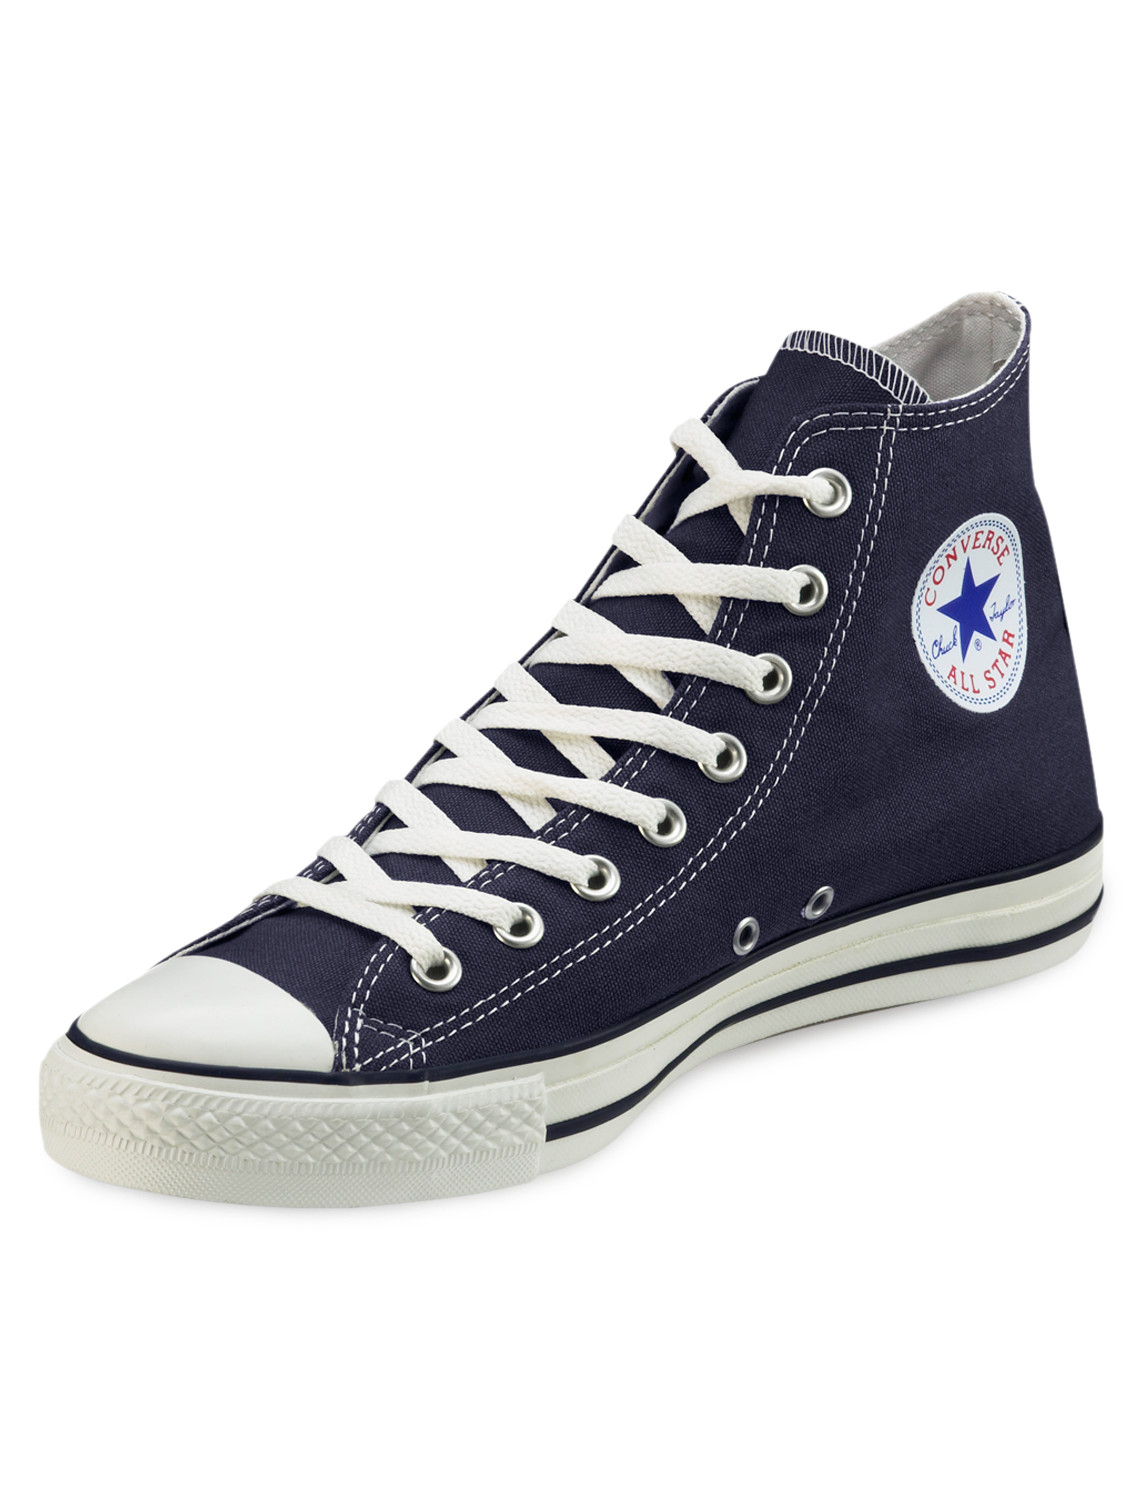 Converse All Star Chuck Taylor Hi-Top Sneakers Casual Male XL Big ...